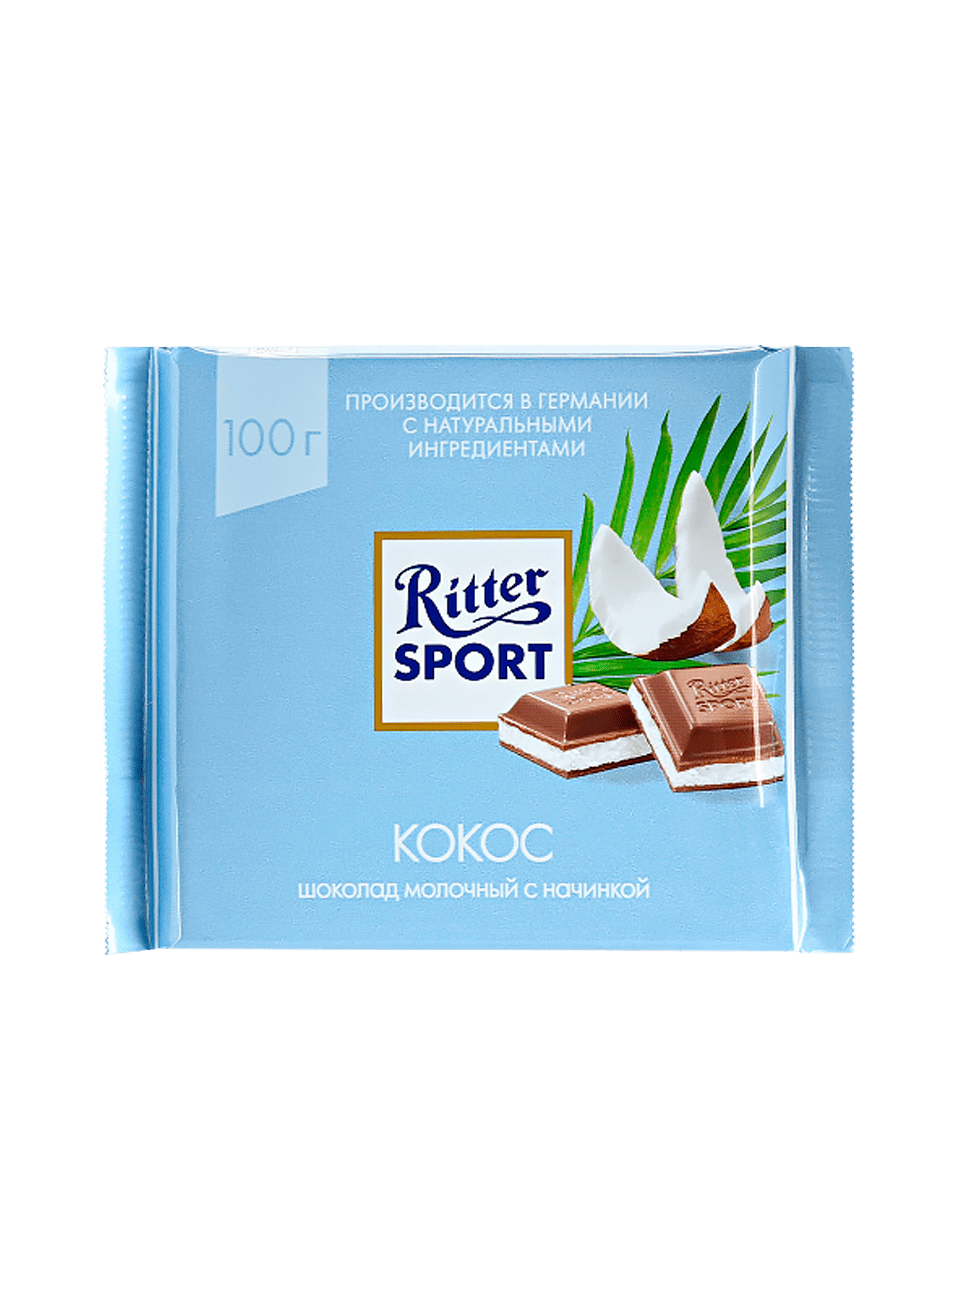 Риттер спорт шок-д мол. с кокосовой начинкой 100 г